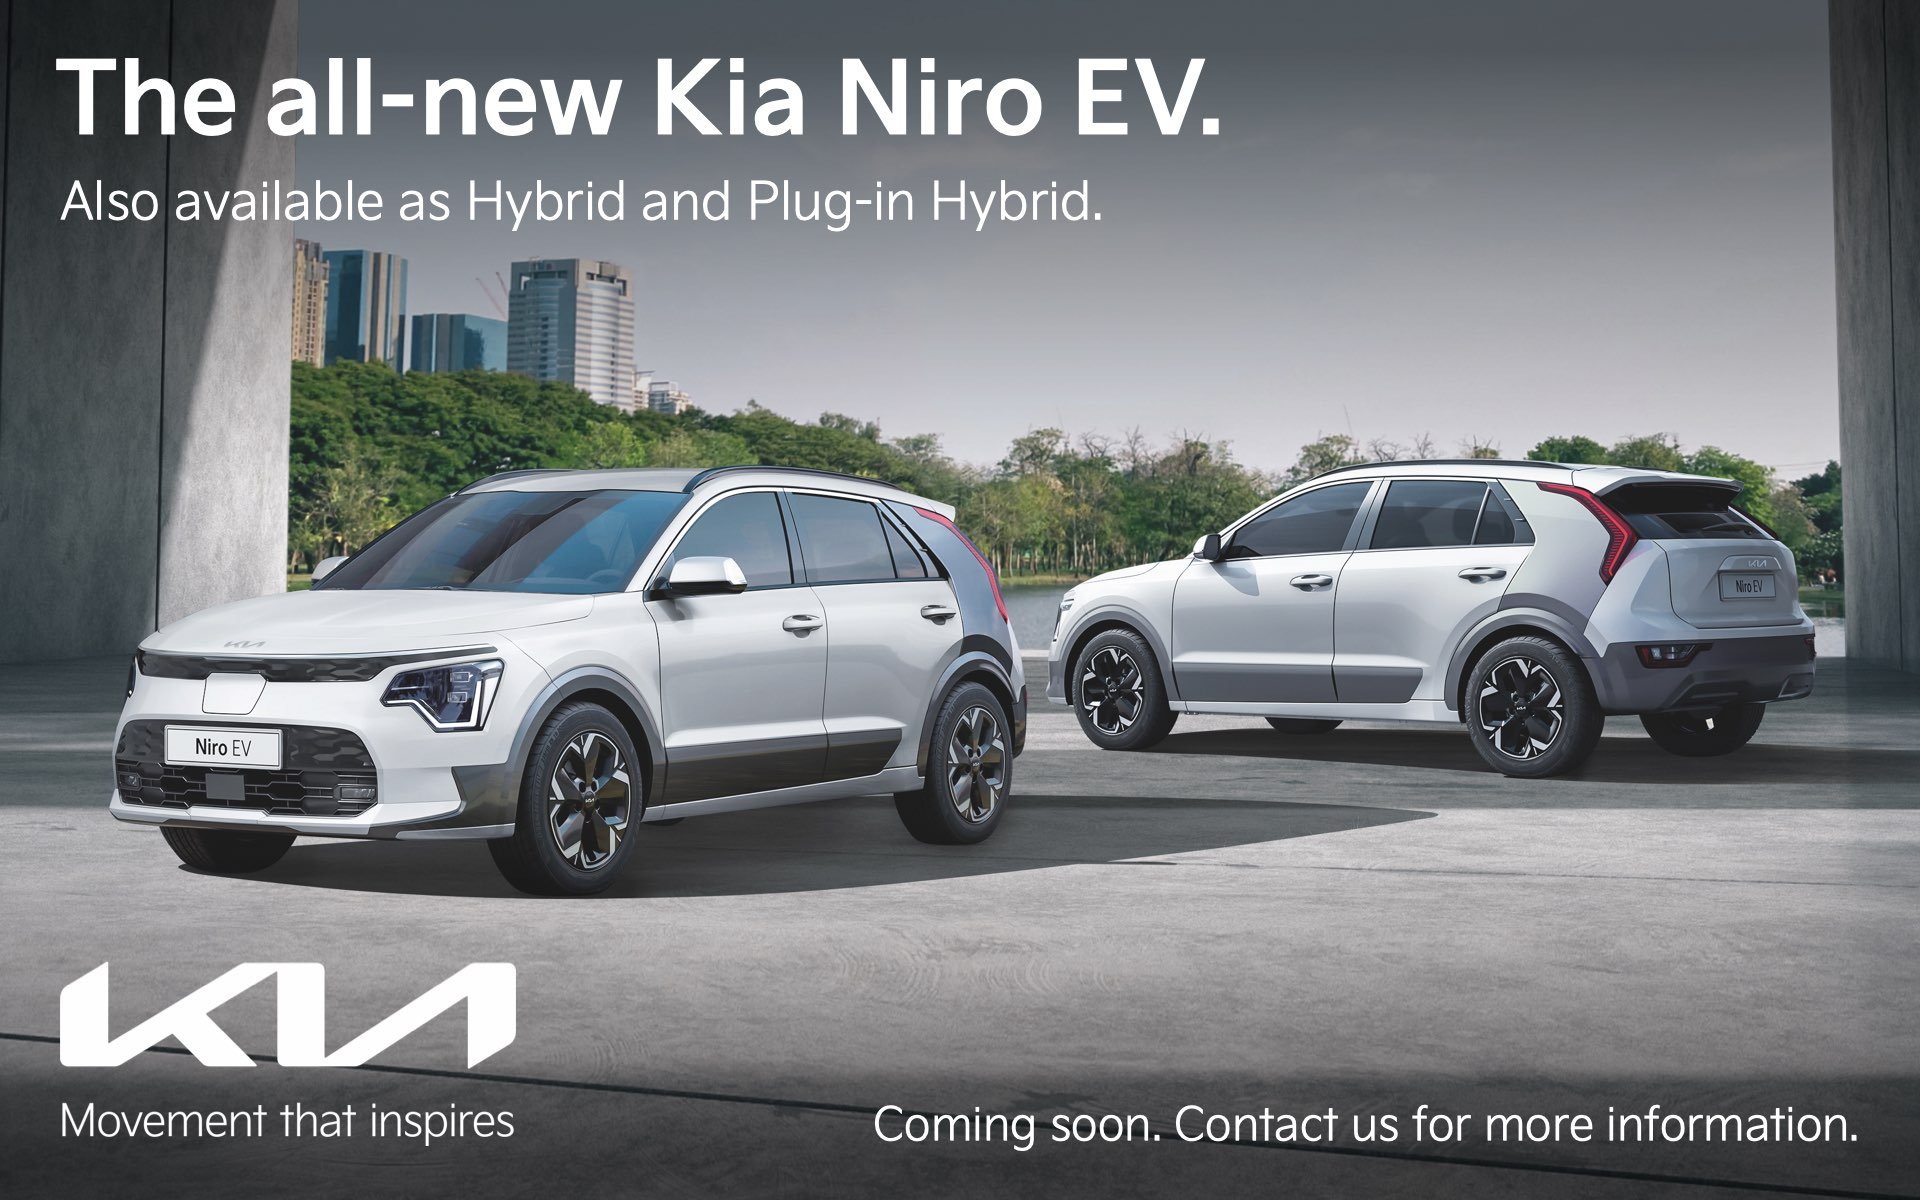 All-new Kia Niro